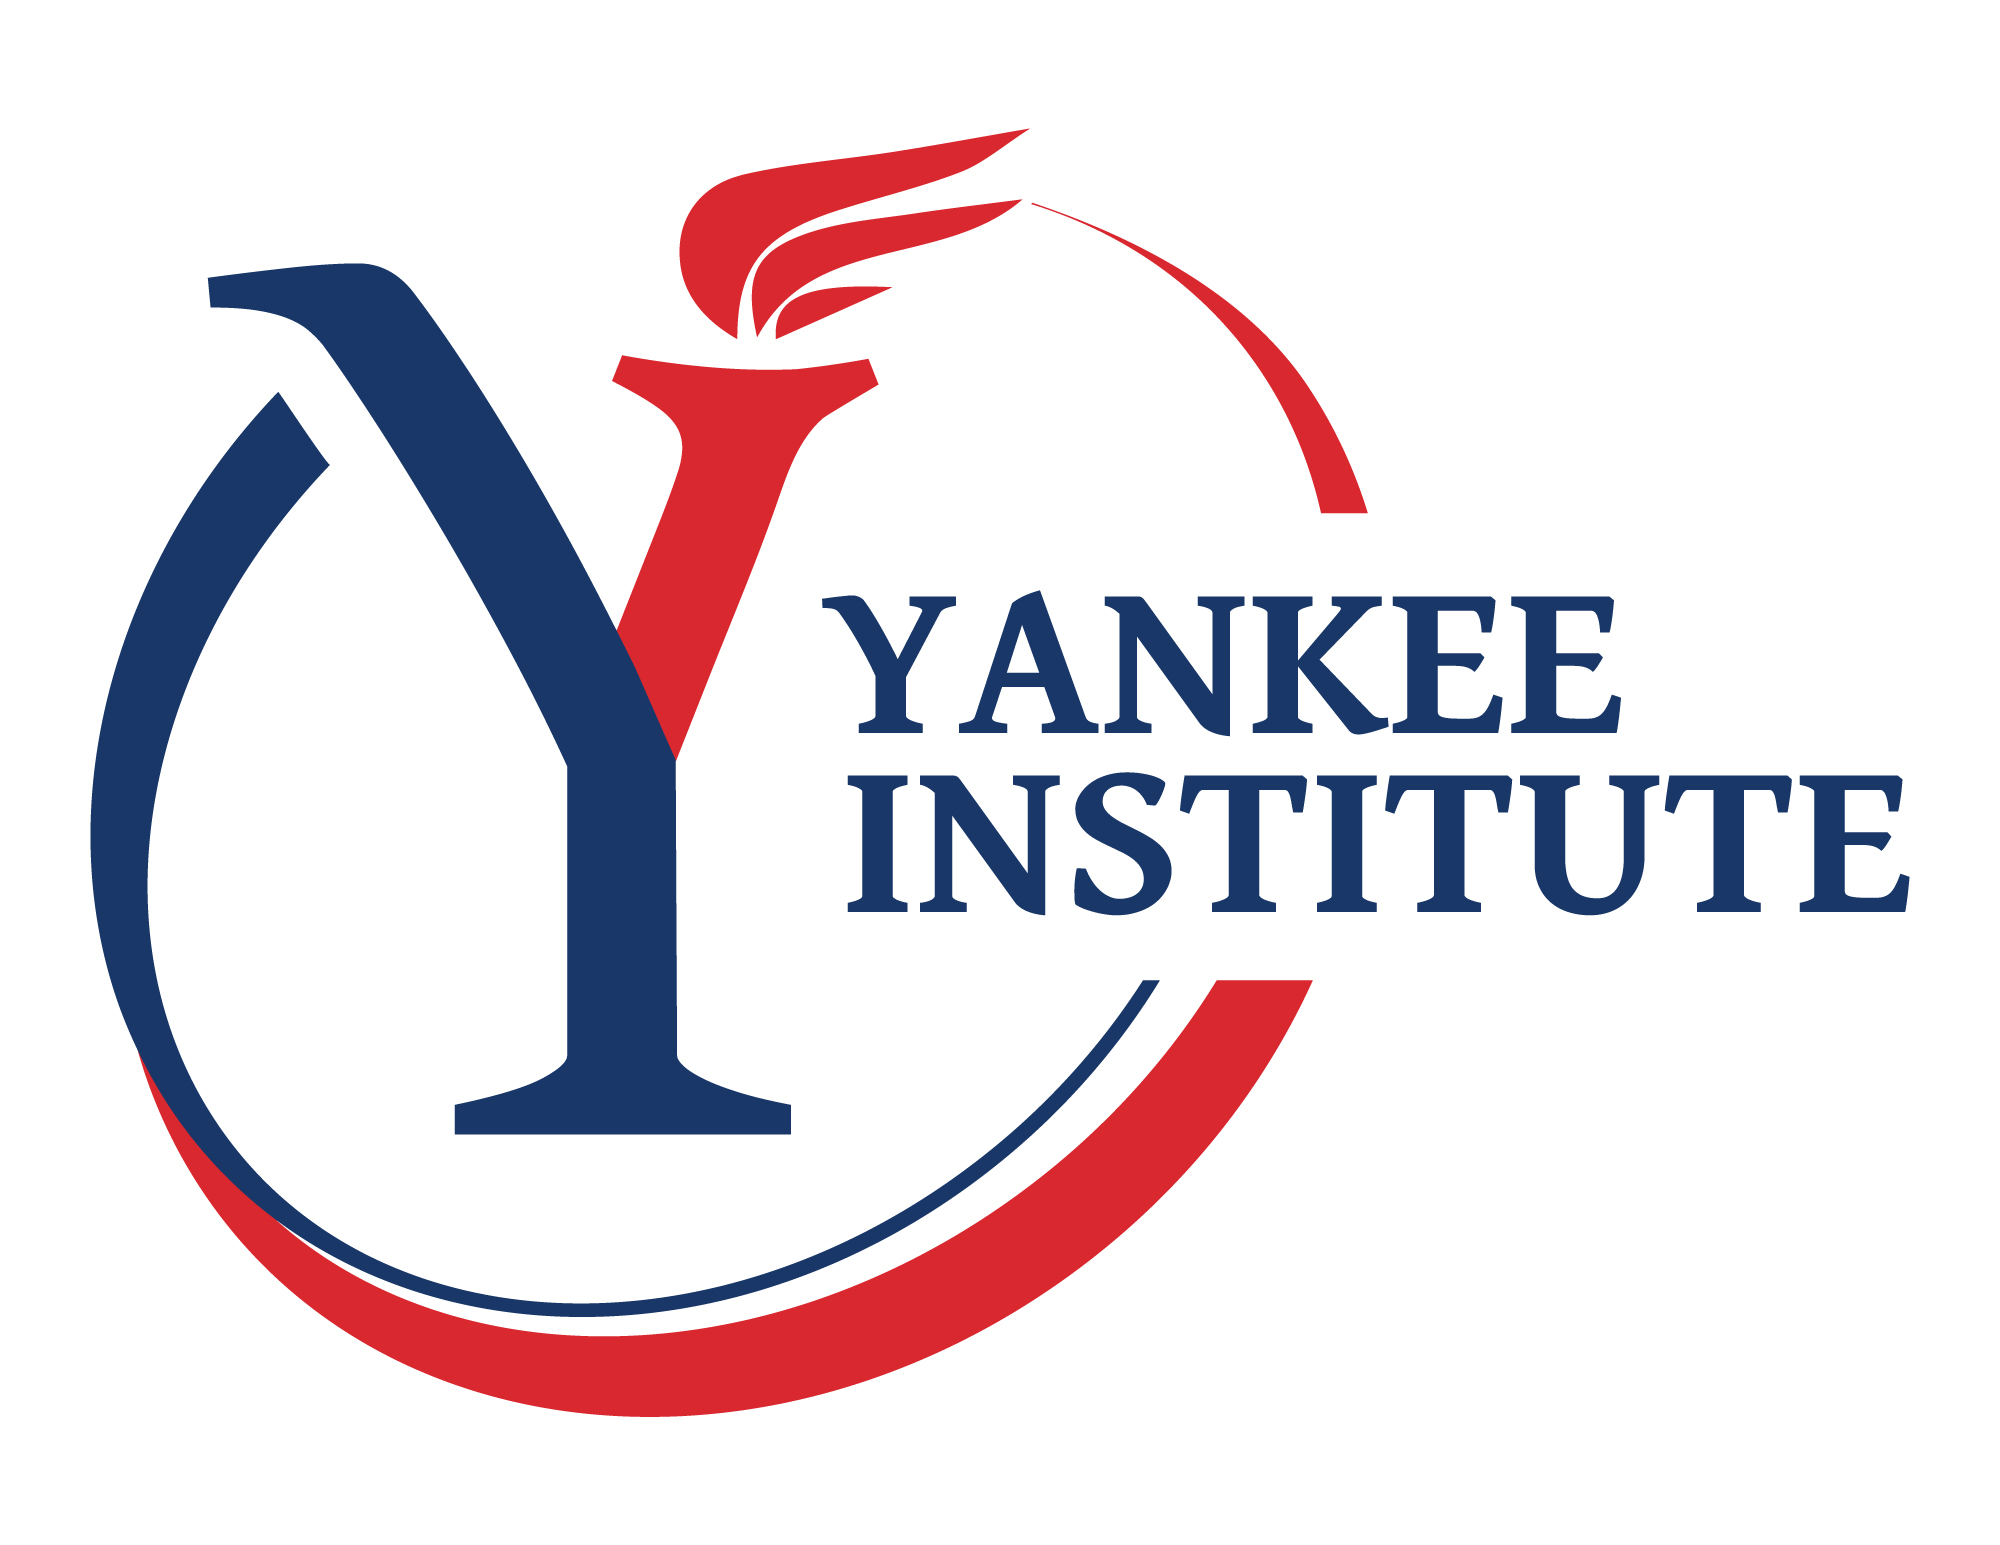 Yankee Institute statement regarding extension of Gov. Lamont’s emergency powers